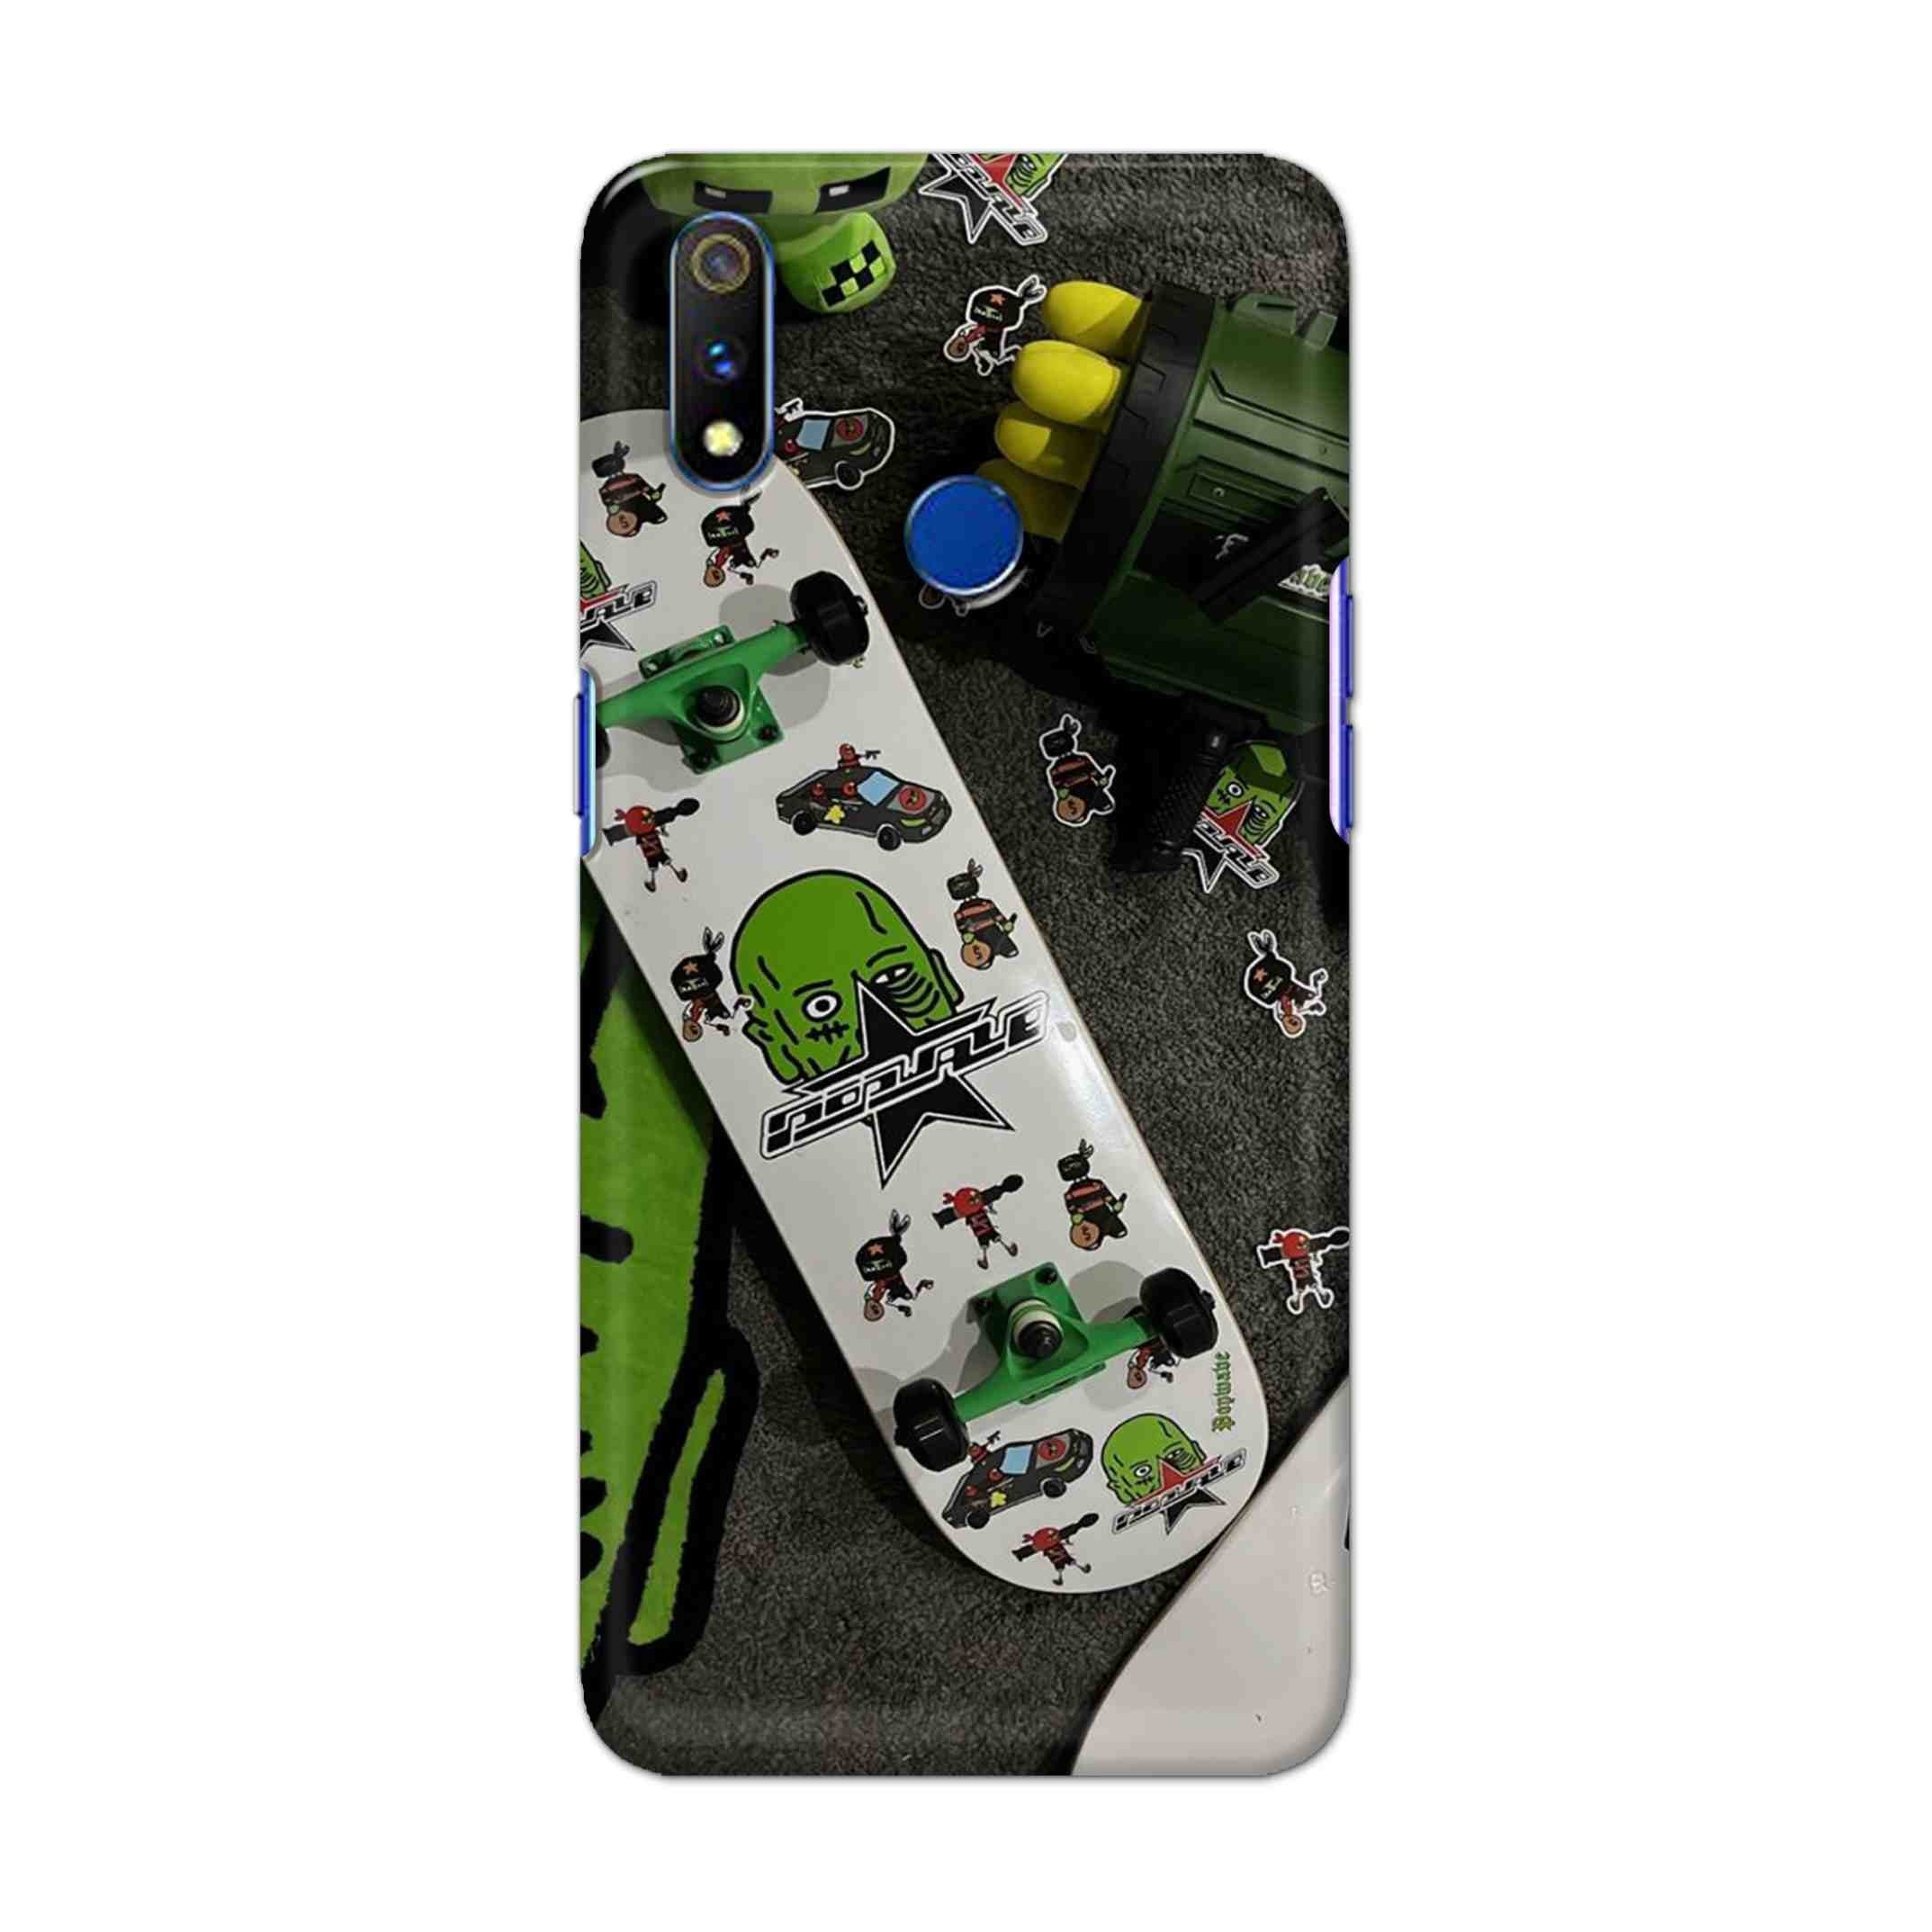 Buy Hulk Skateboard Hard Back Mobile Phone Case Cover For Realme 3 Pro Online